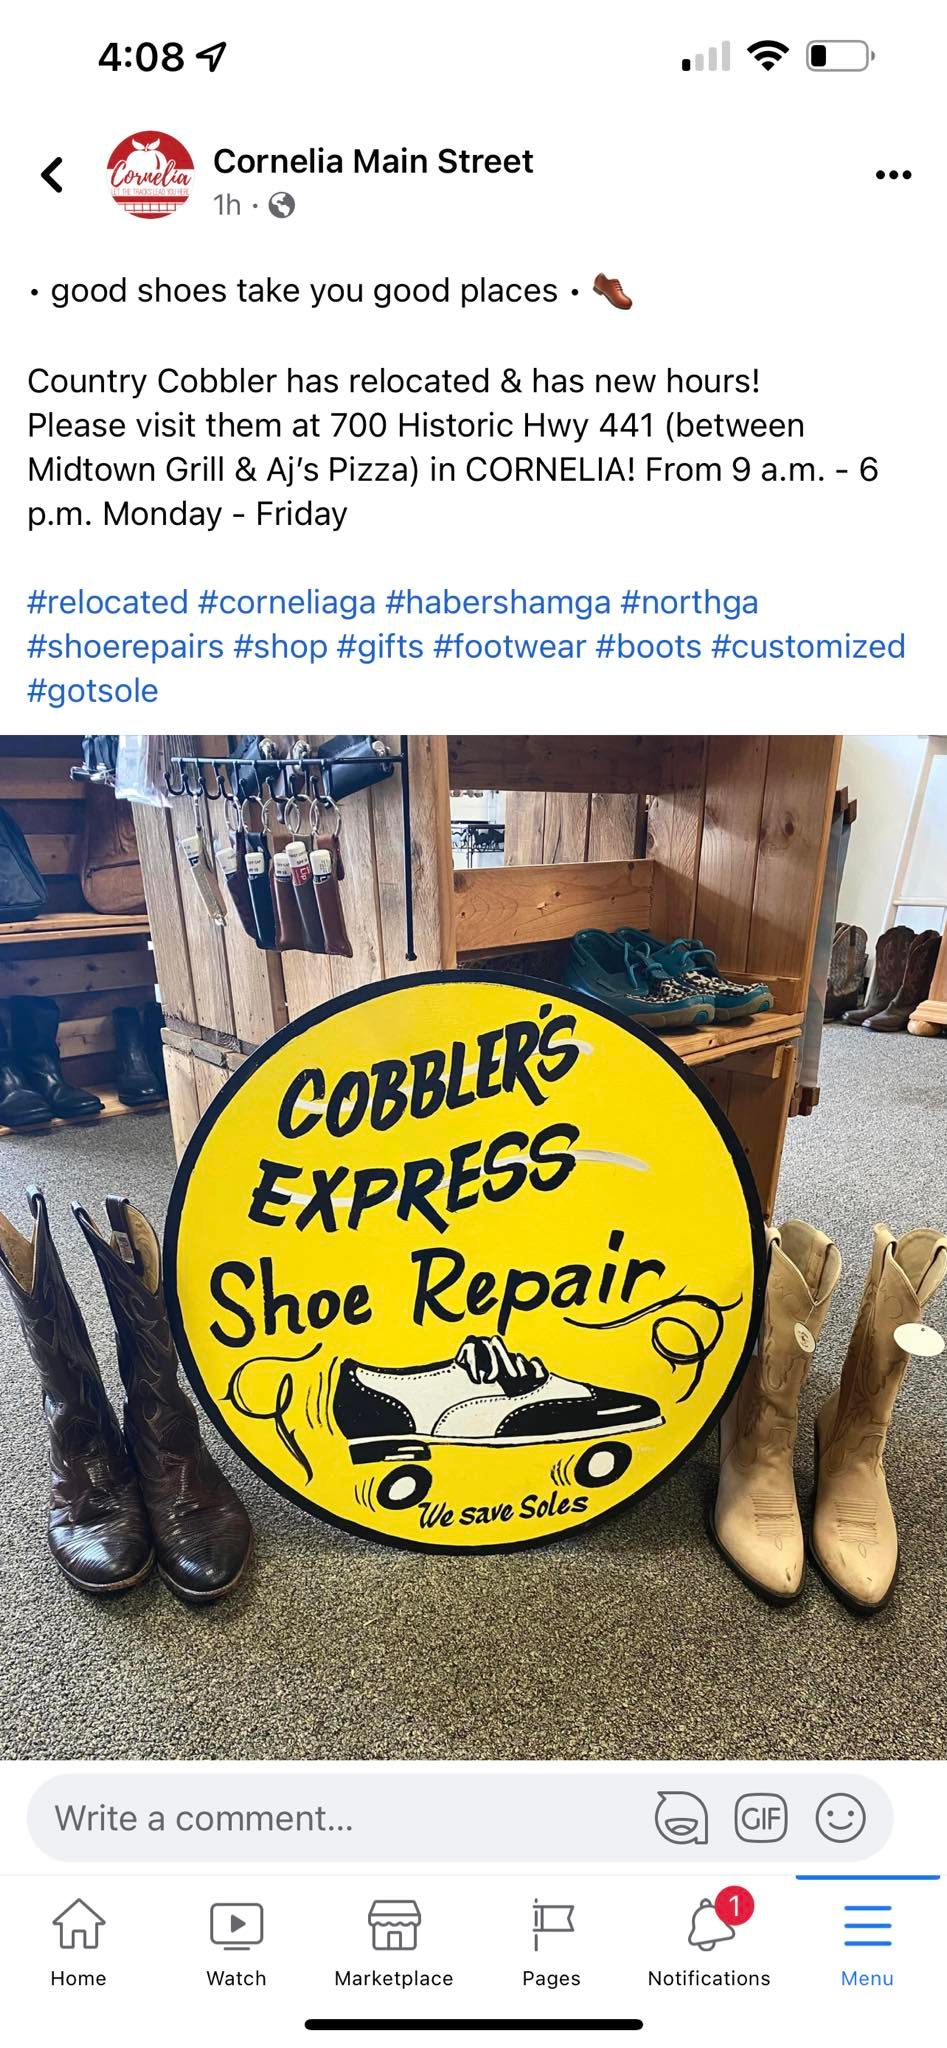 Country Cobbler Shoe Repair Midway Station Plaza, 700, US-441 BUS, Cornelia Georgia 30531